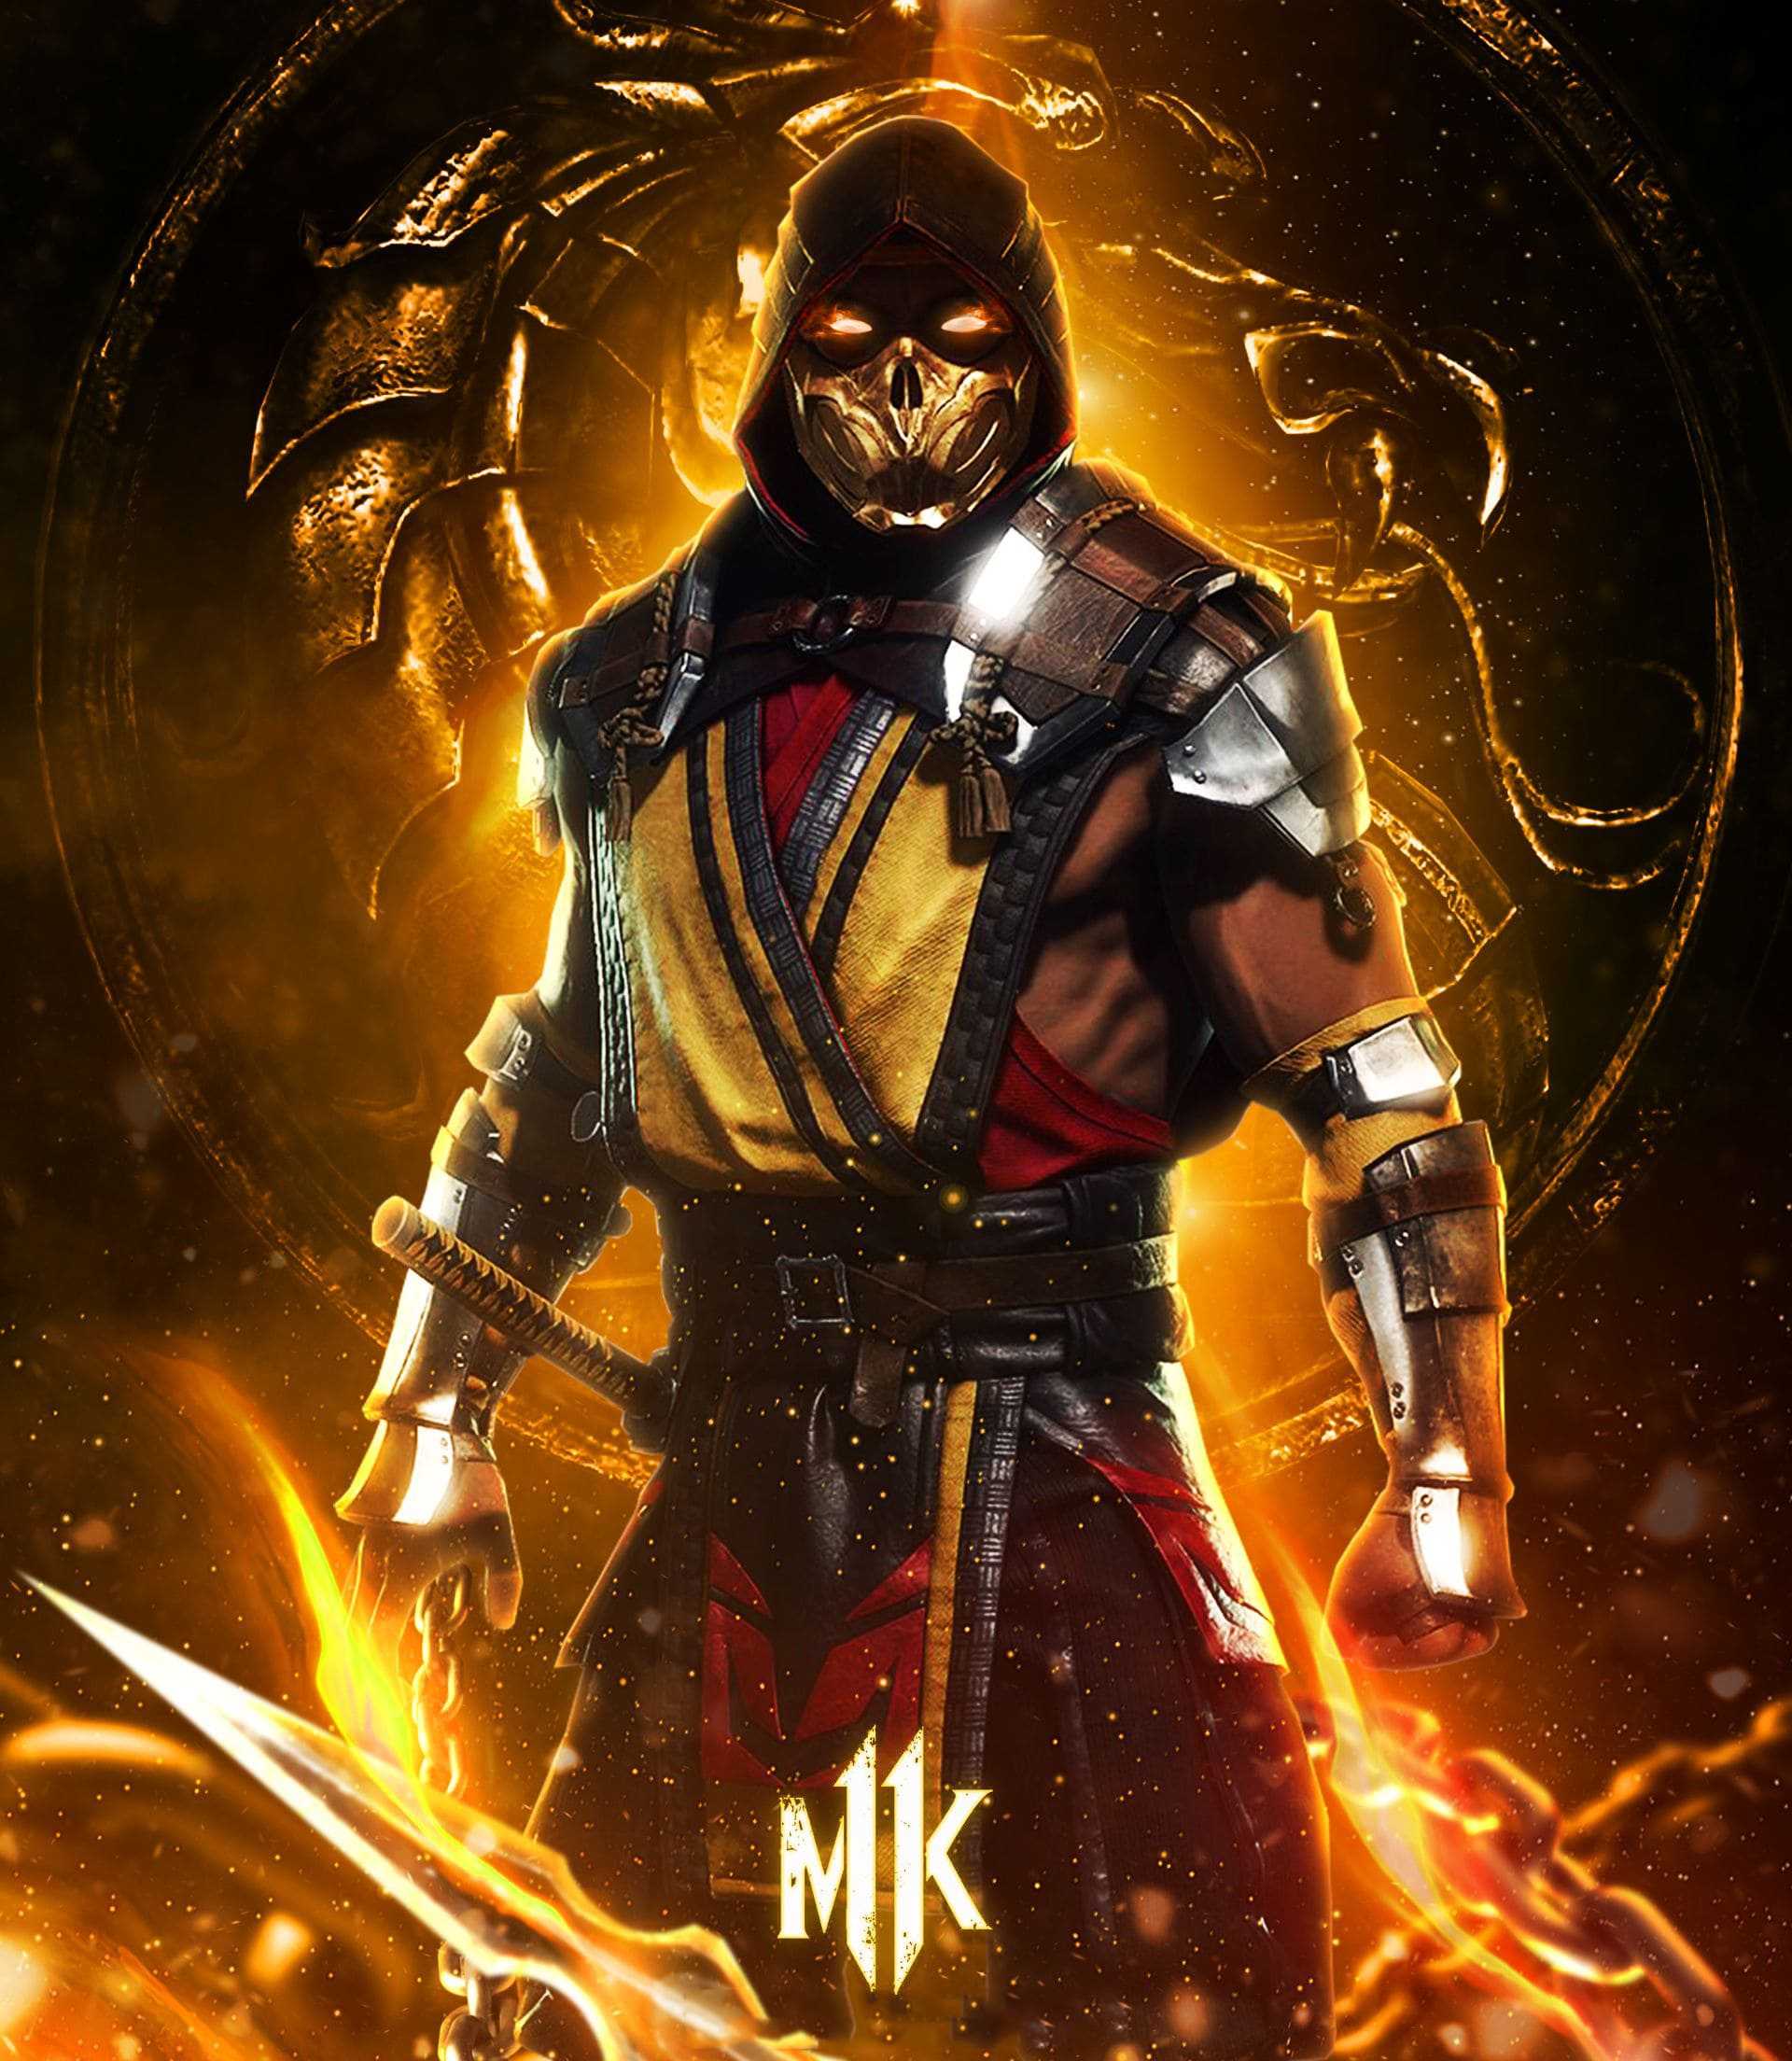 Mortal Kombat 2021 Wallpaper Free HD Wallpaper